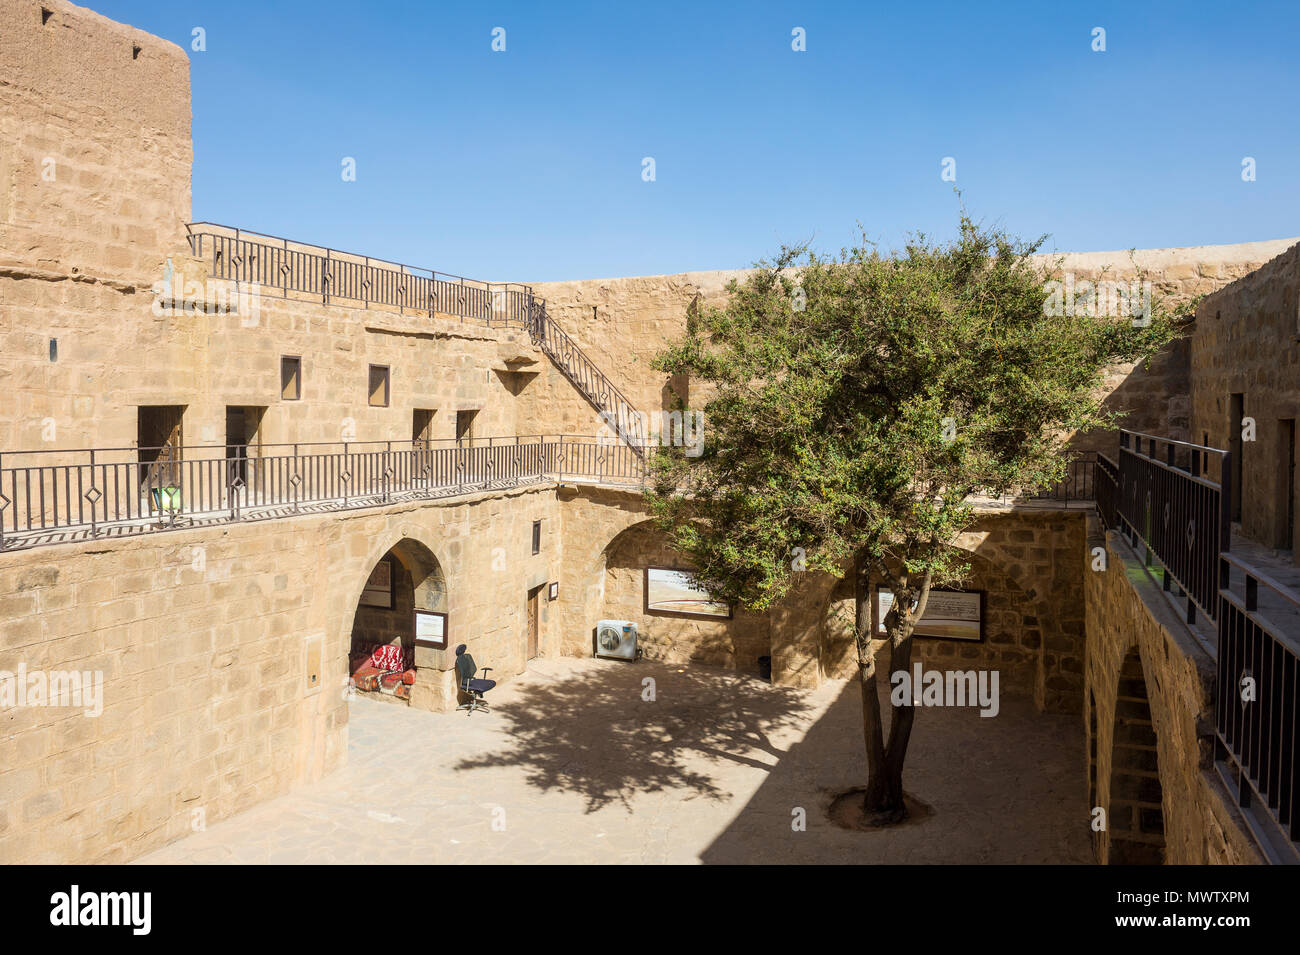 Old Fort, citadel in Tabuk, Saudi Arabia, Middle East Stock Photo